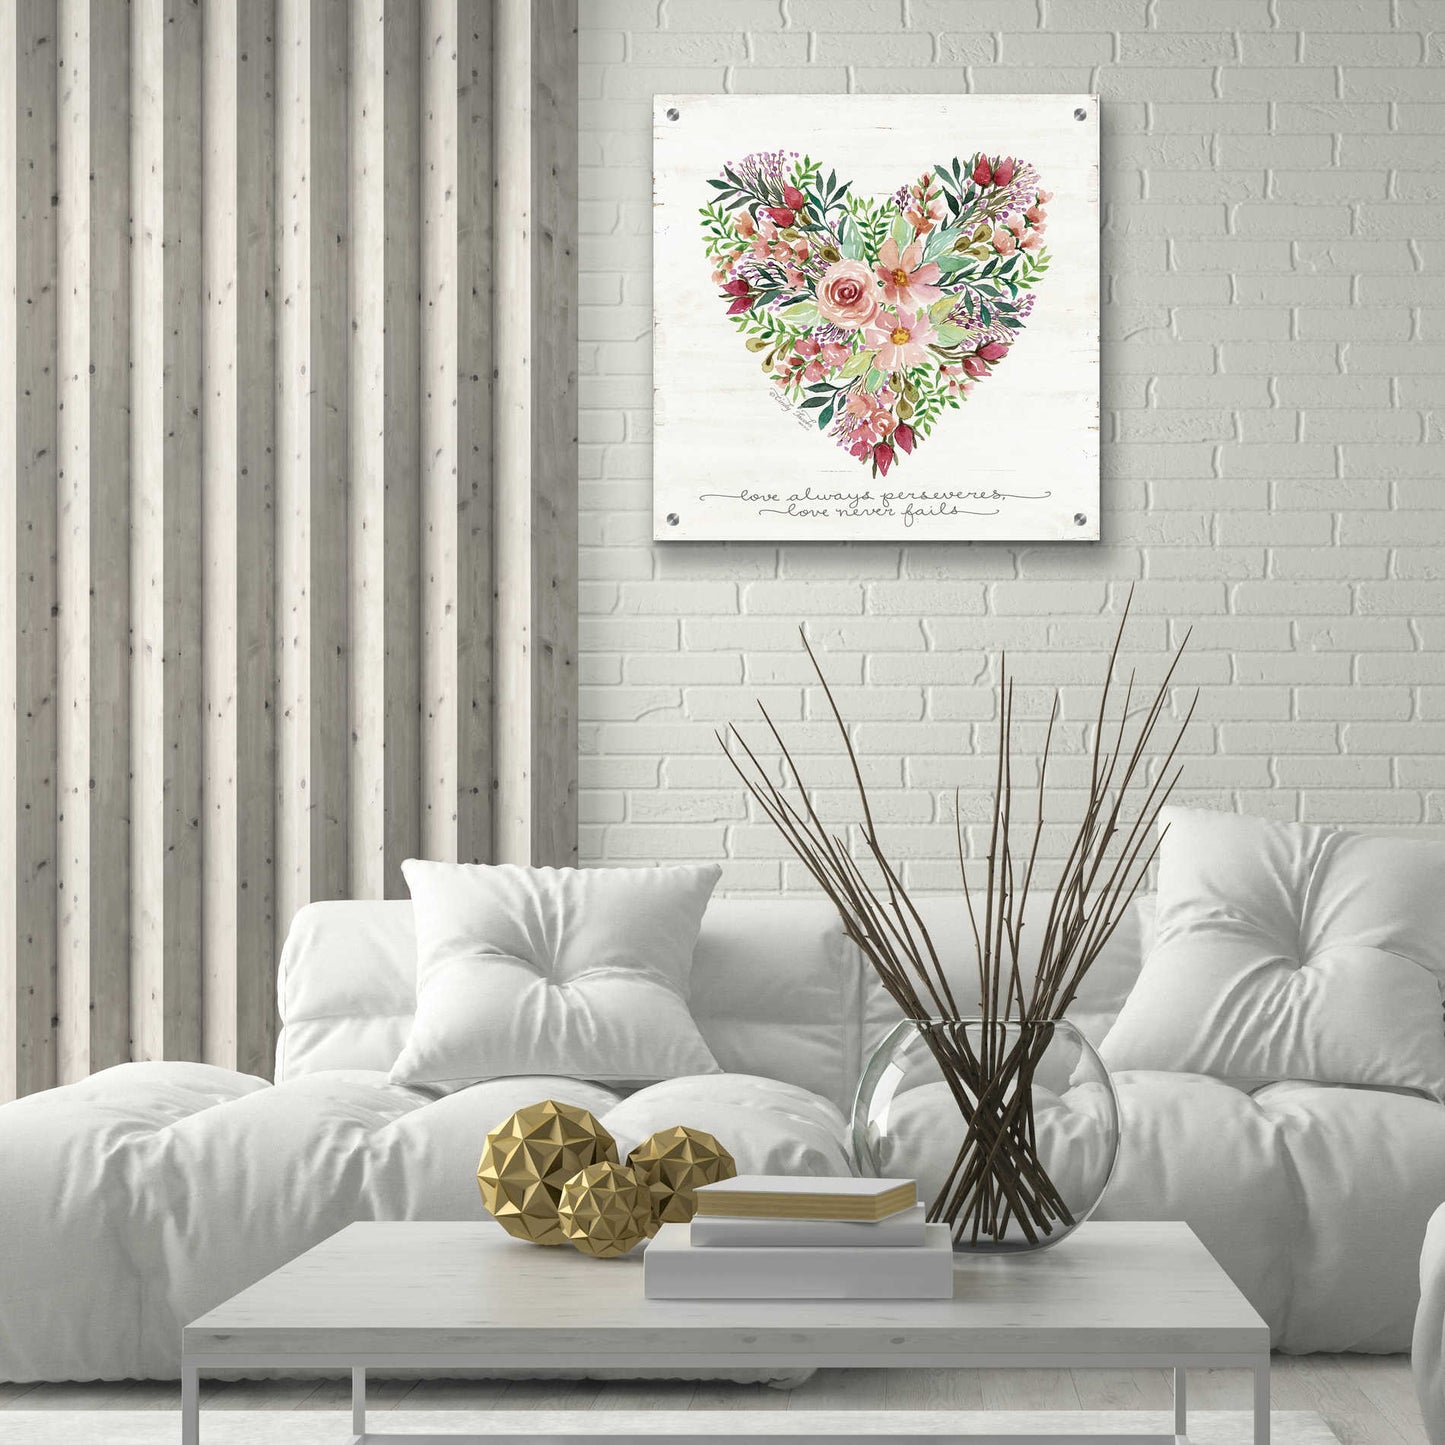 Epic Art 'Love Never Fails Flower Heart' by Cindy Jacobs, Acrylic Glass Wall Art,24x24